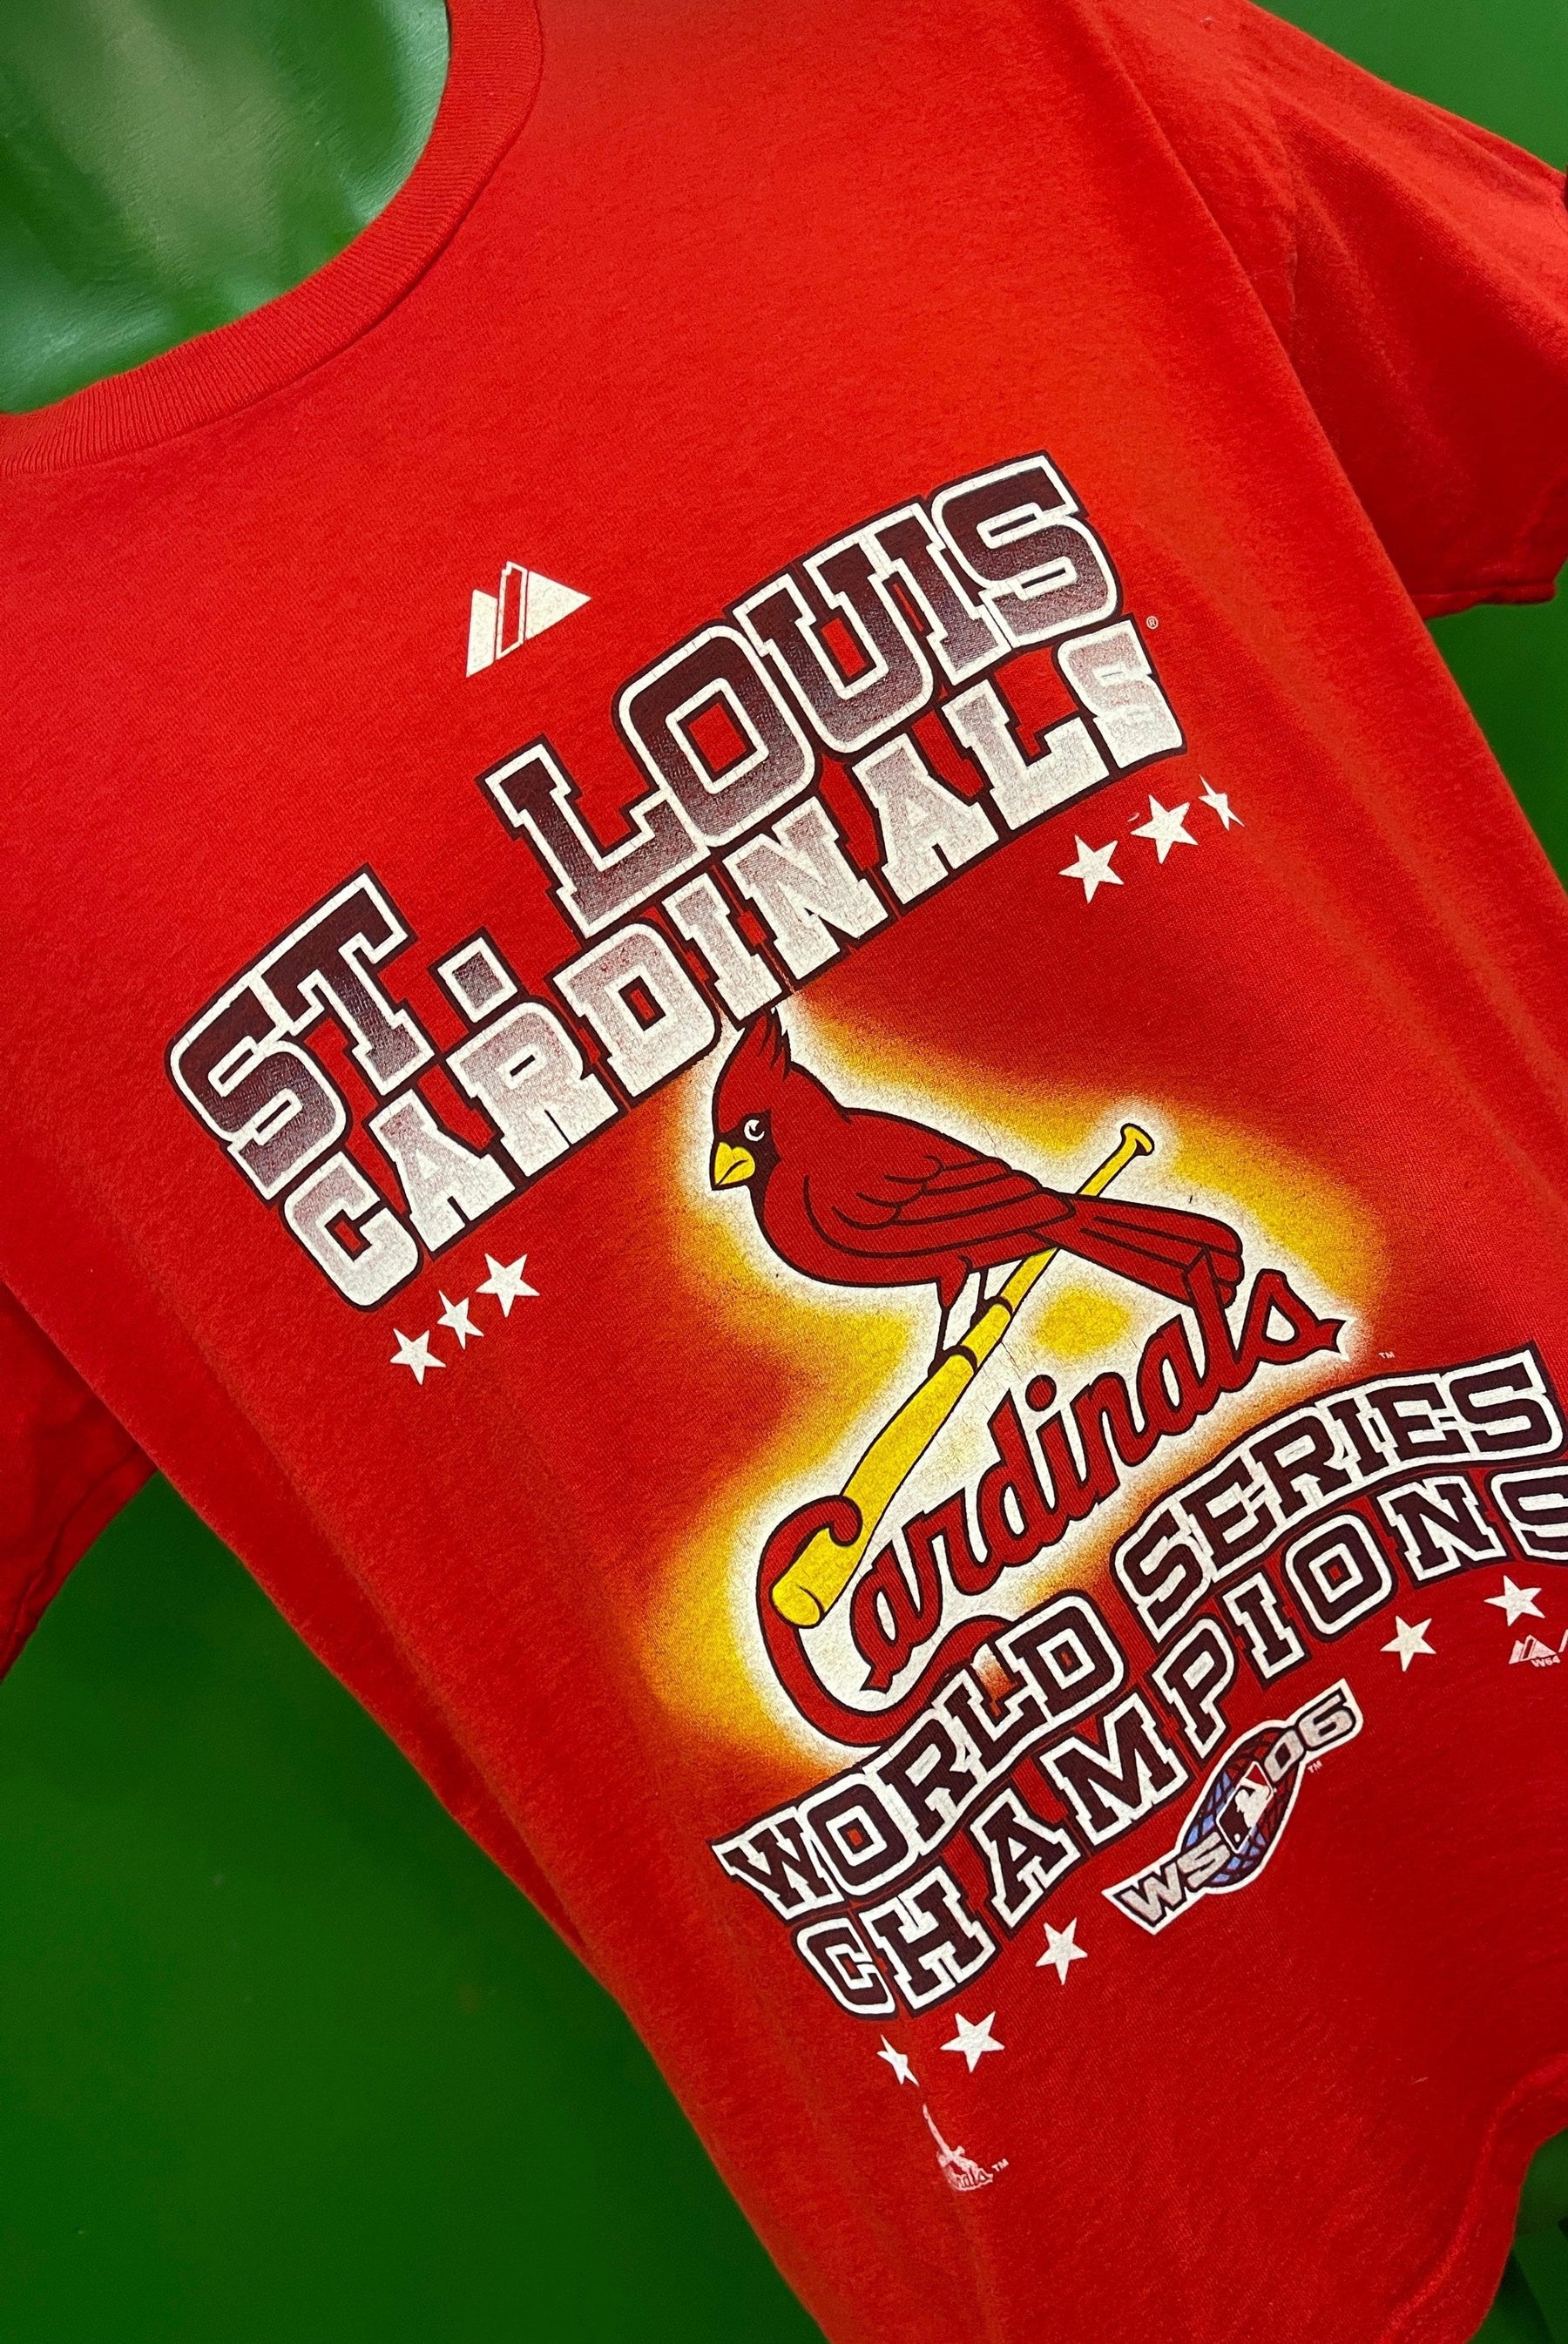 MLB St. Louis Cardinals World Series Champions 06 T-Shirt Youth X-Large 18-20